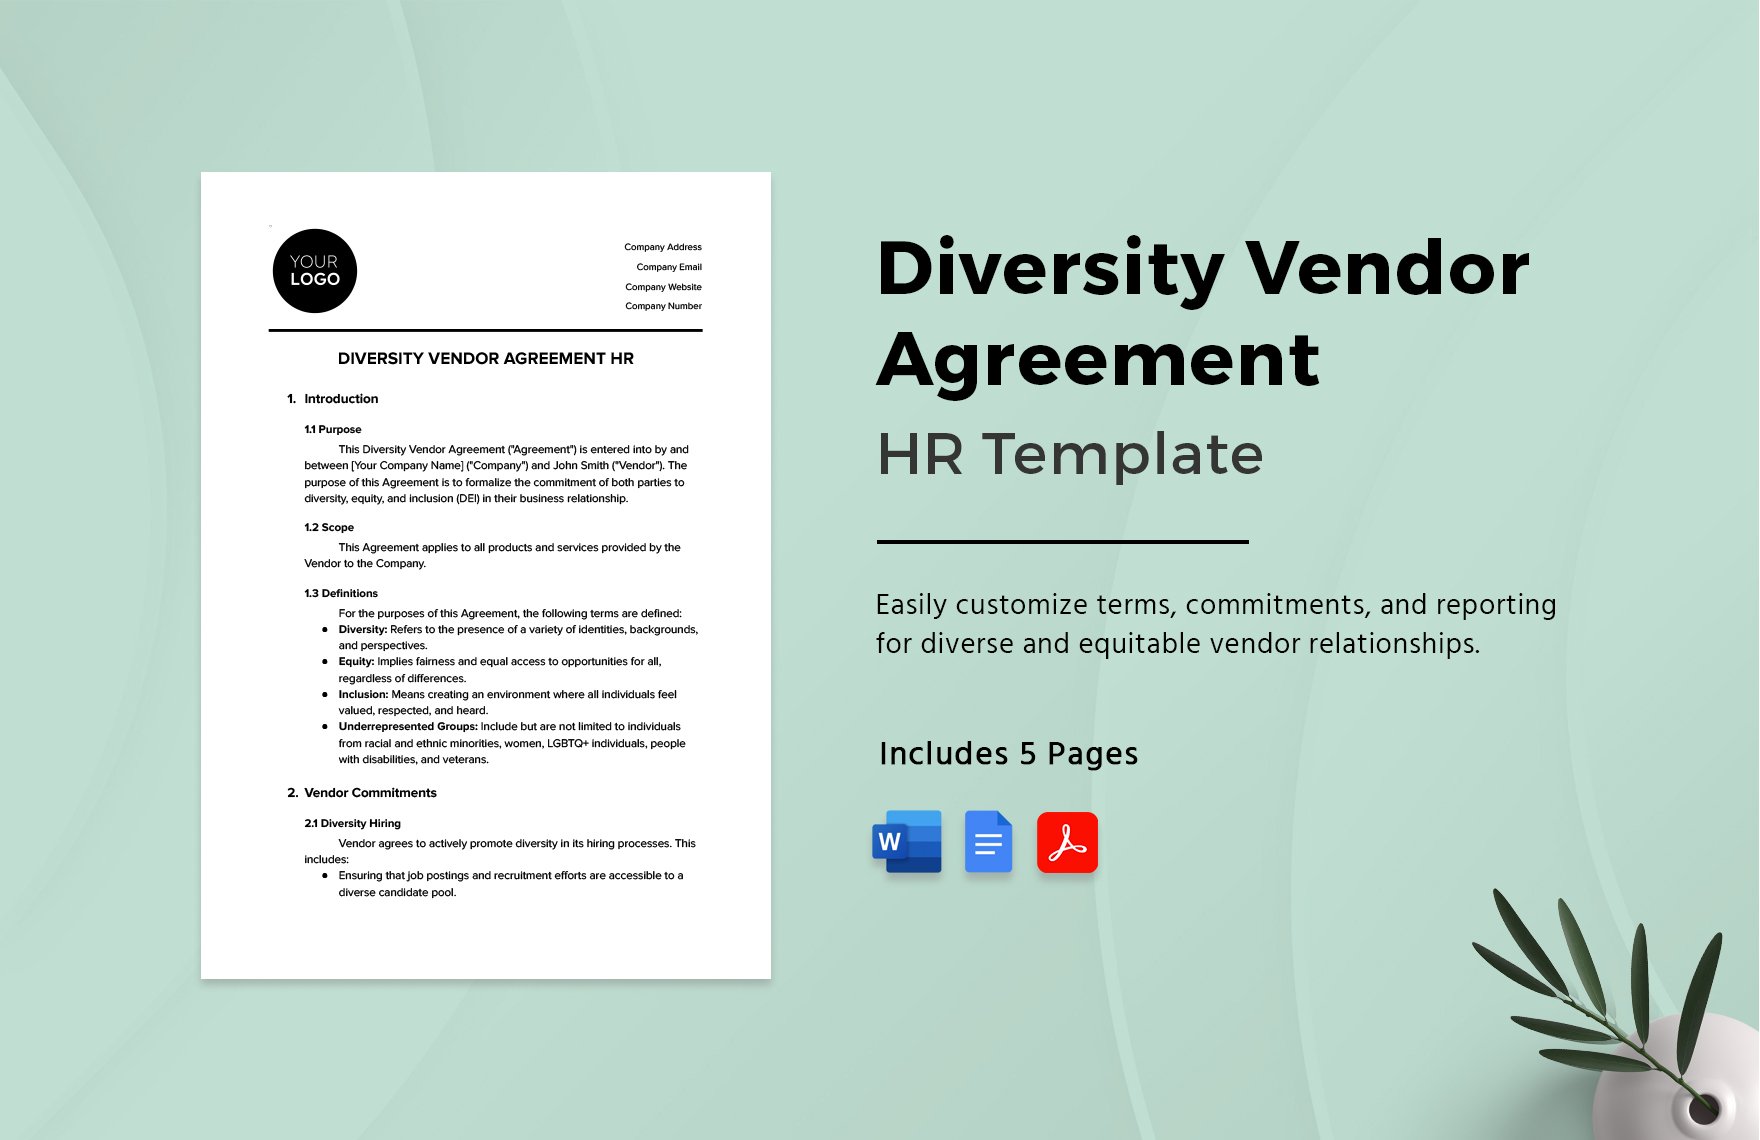  Diversity Vendor Agreement HR Template